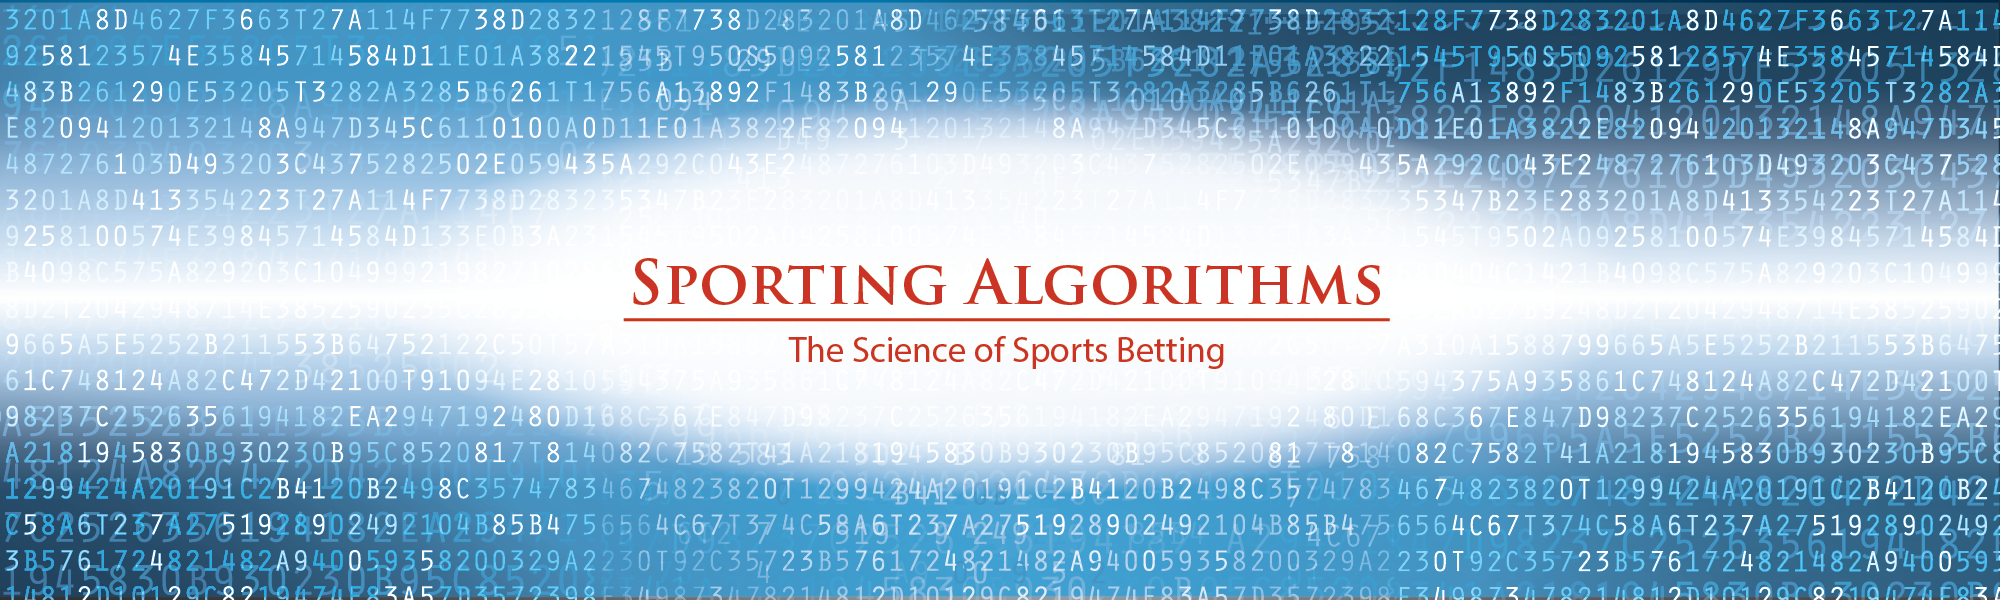 algorithm sports betting system